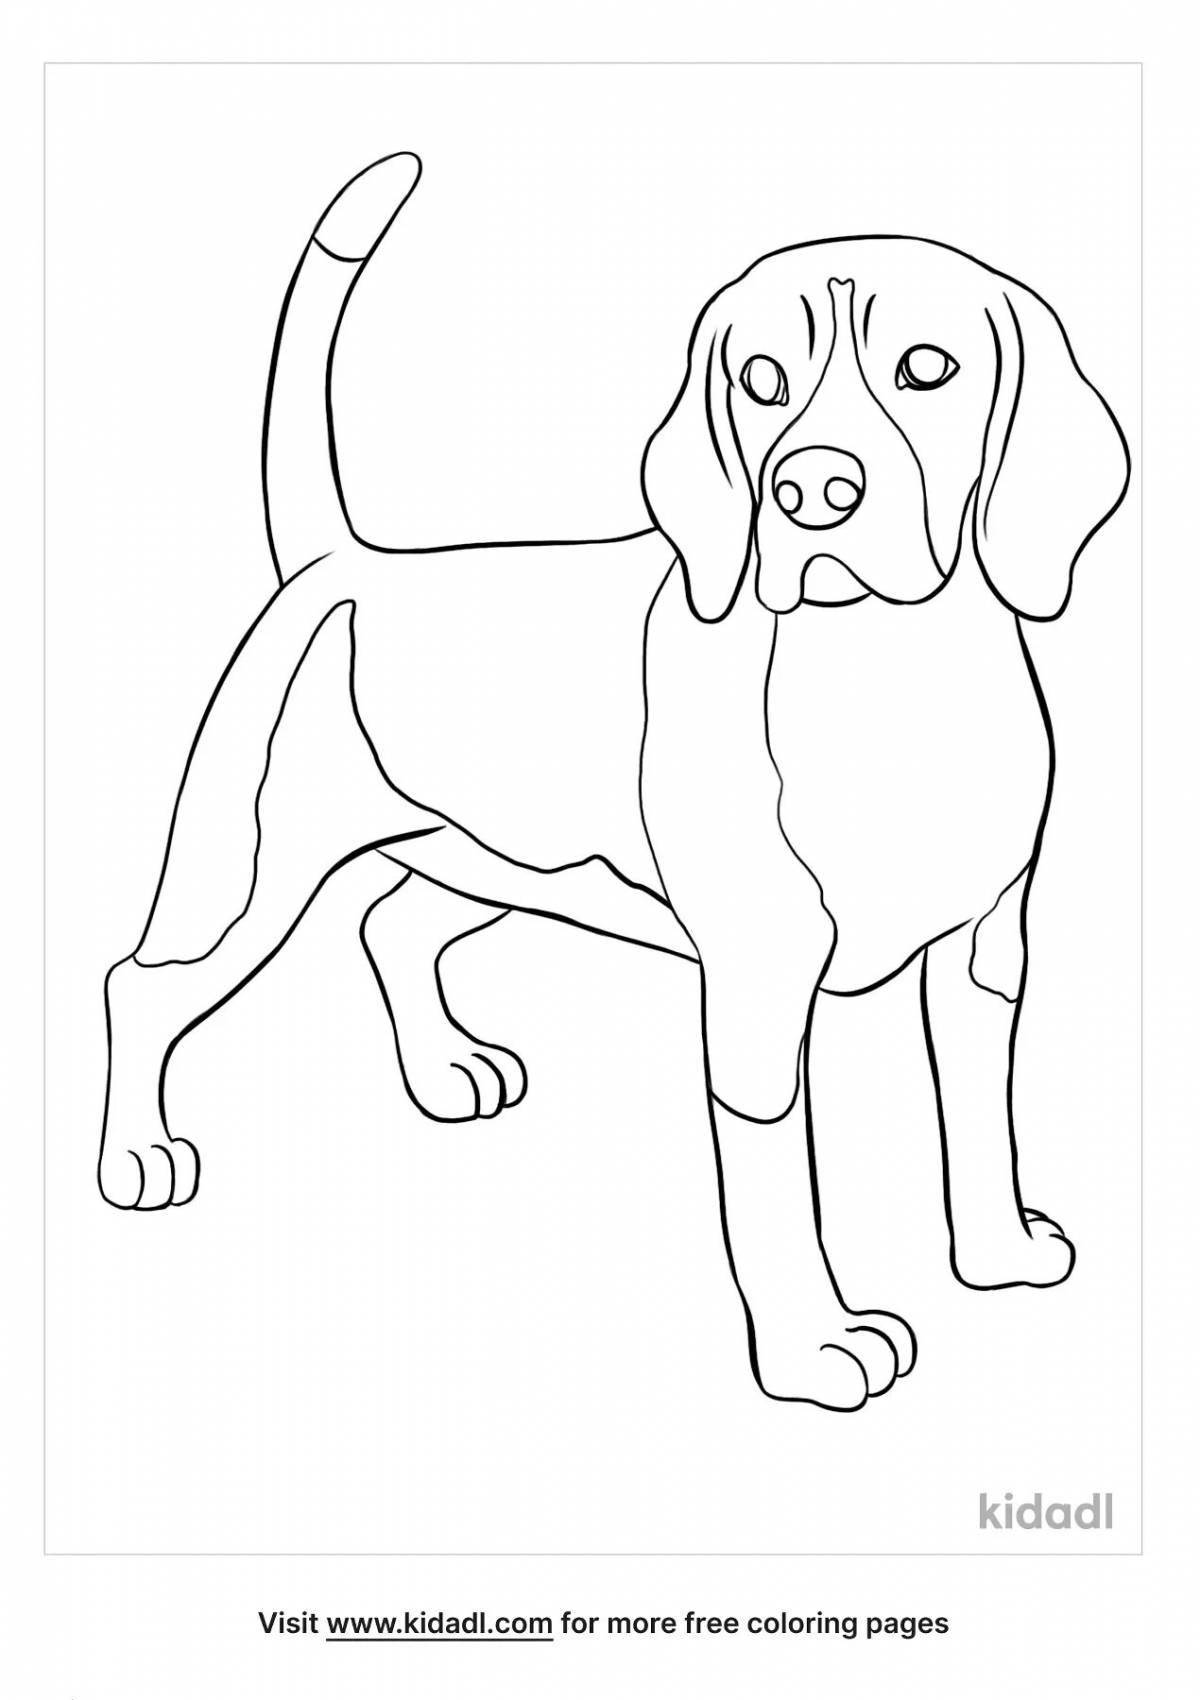 Coloring book magic beagle